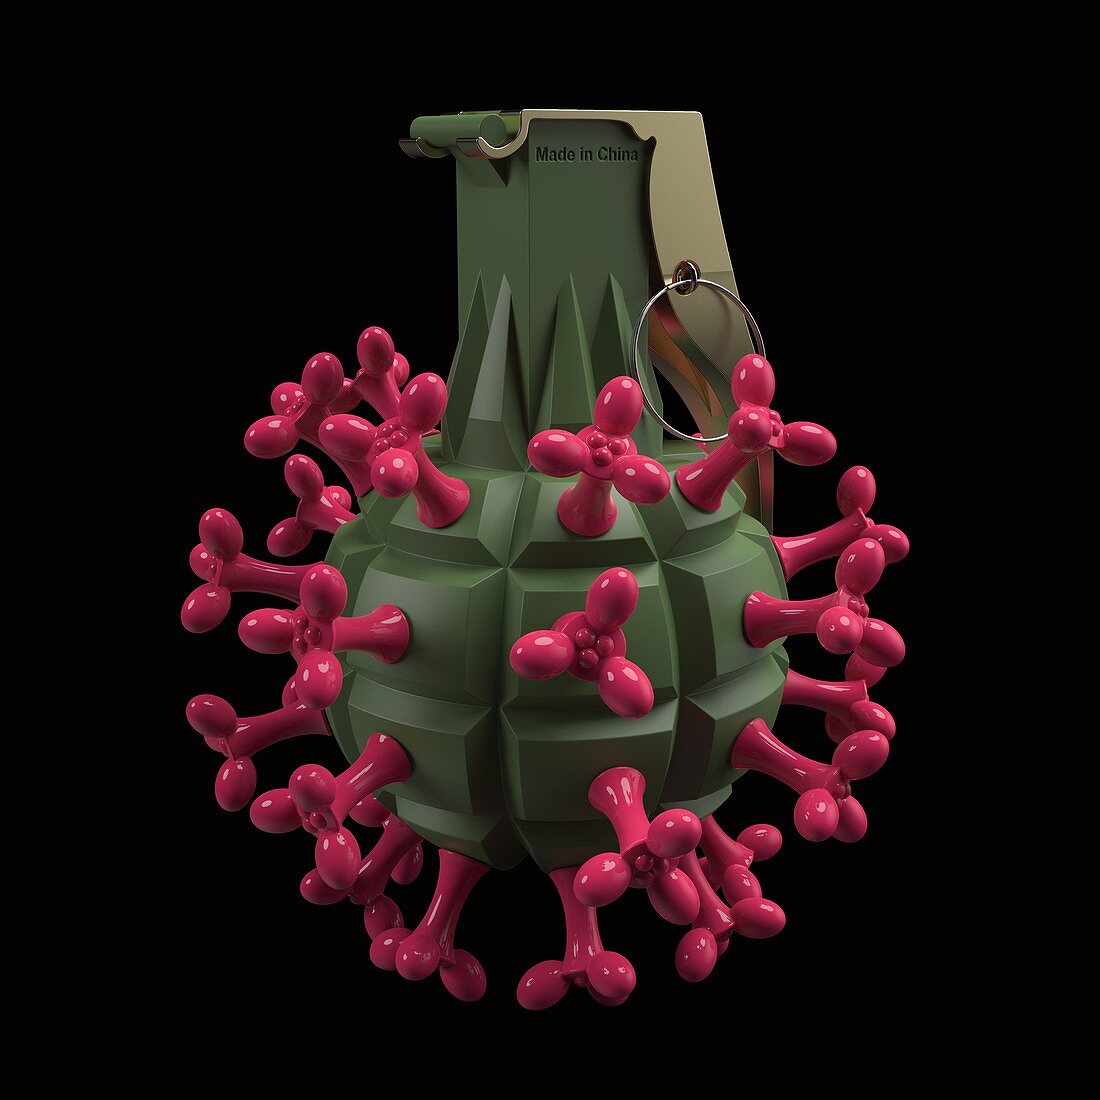 Coronavirus hand grenade, illustration